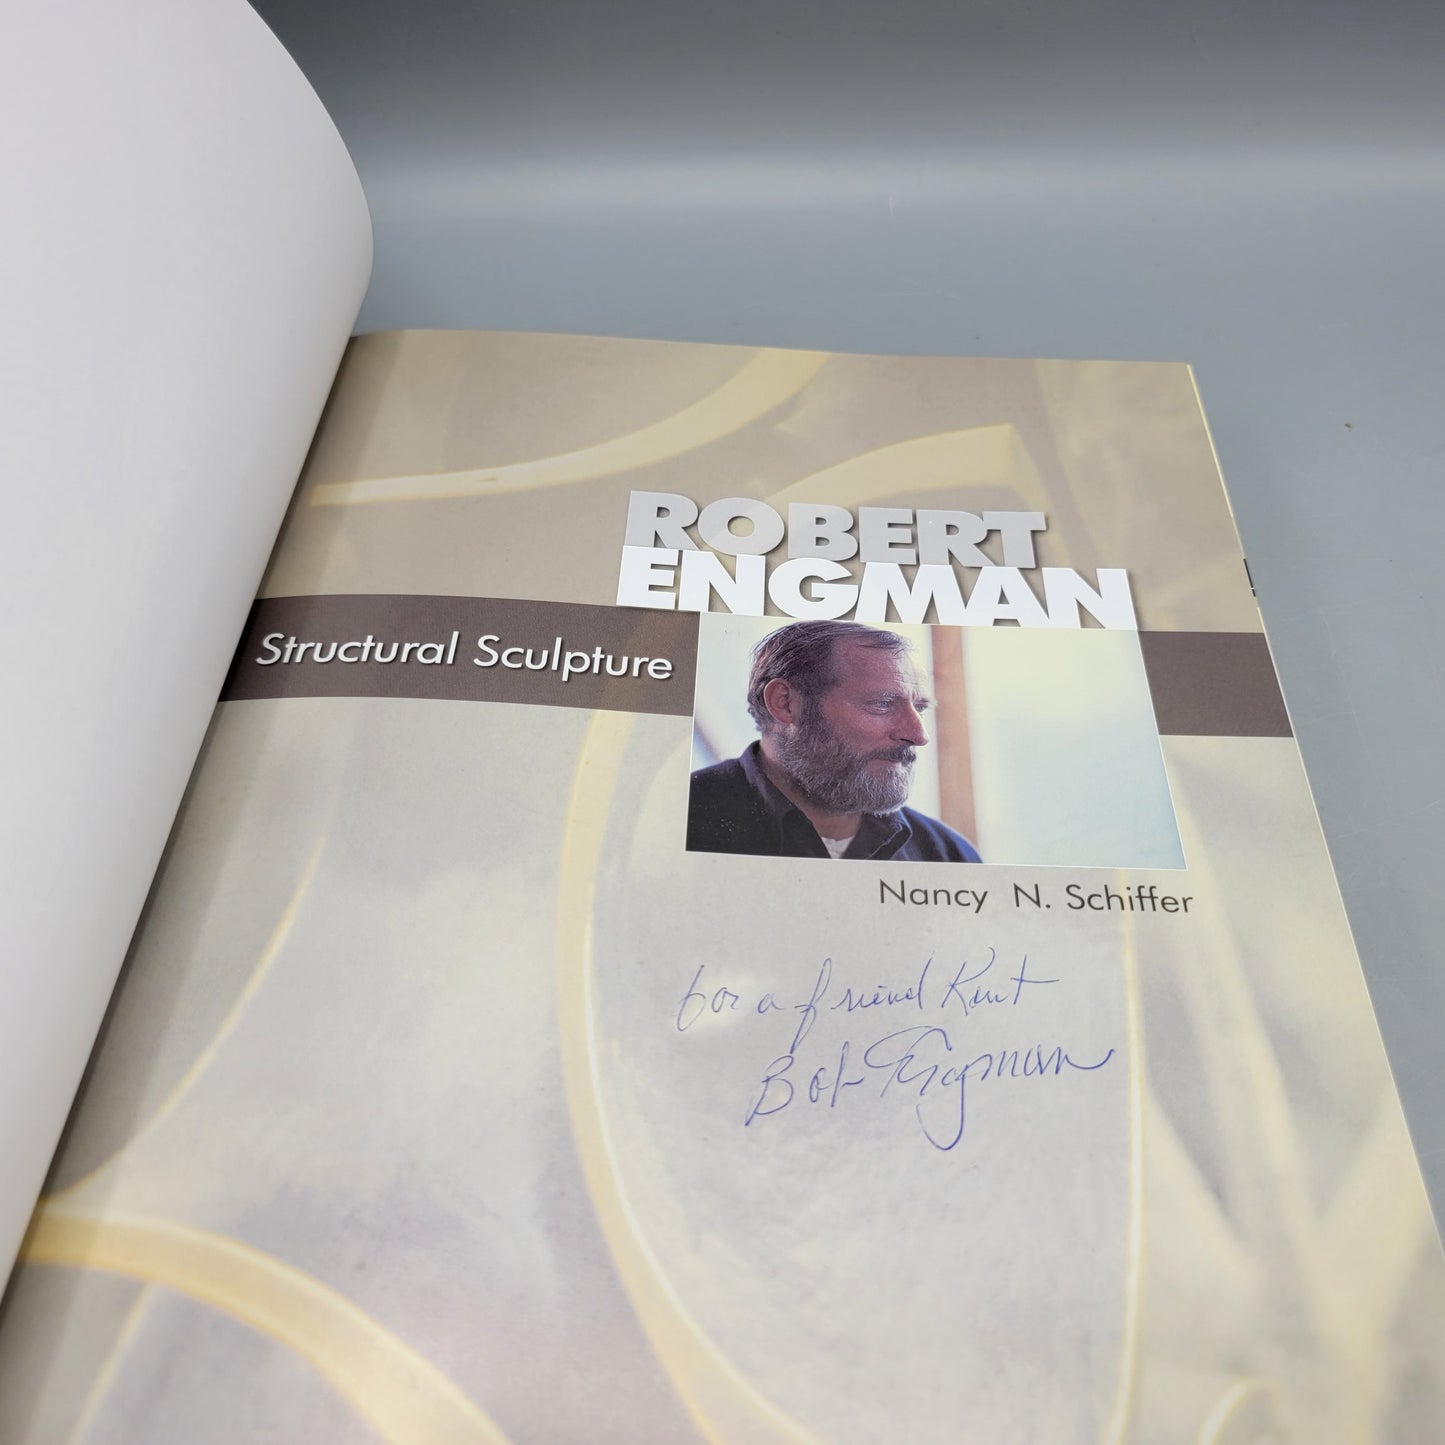 Robert Engman Structural Sculpture Book by Nancy Schiffer Signed